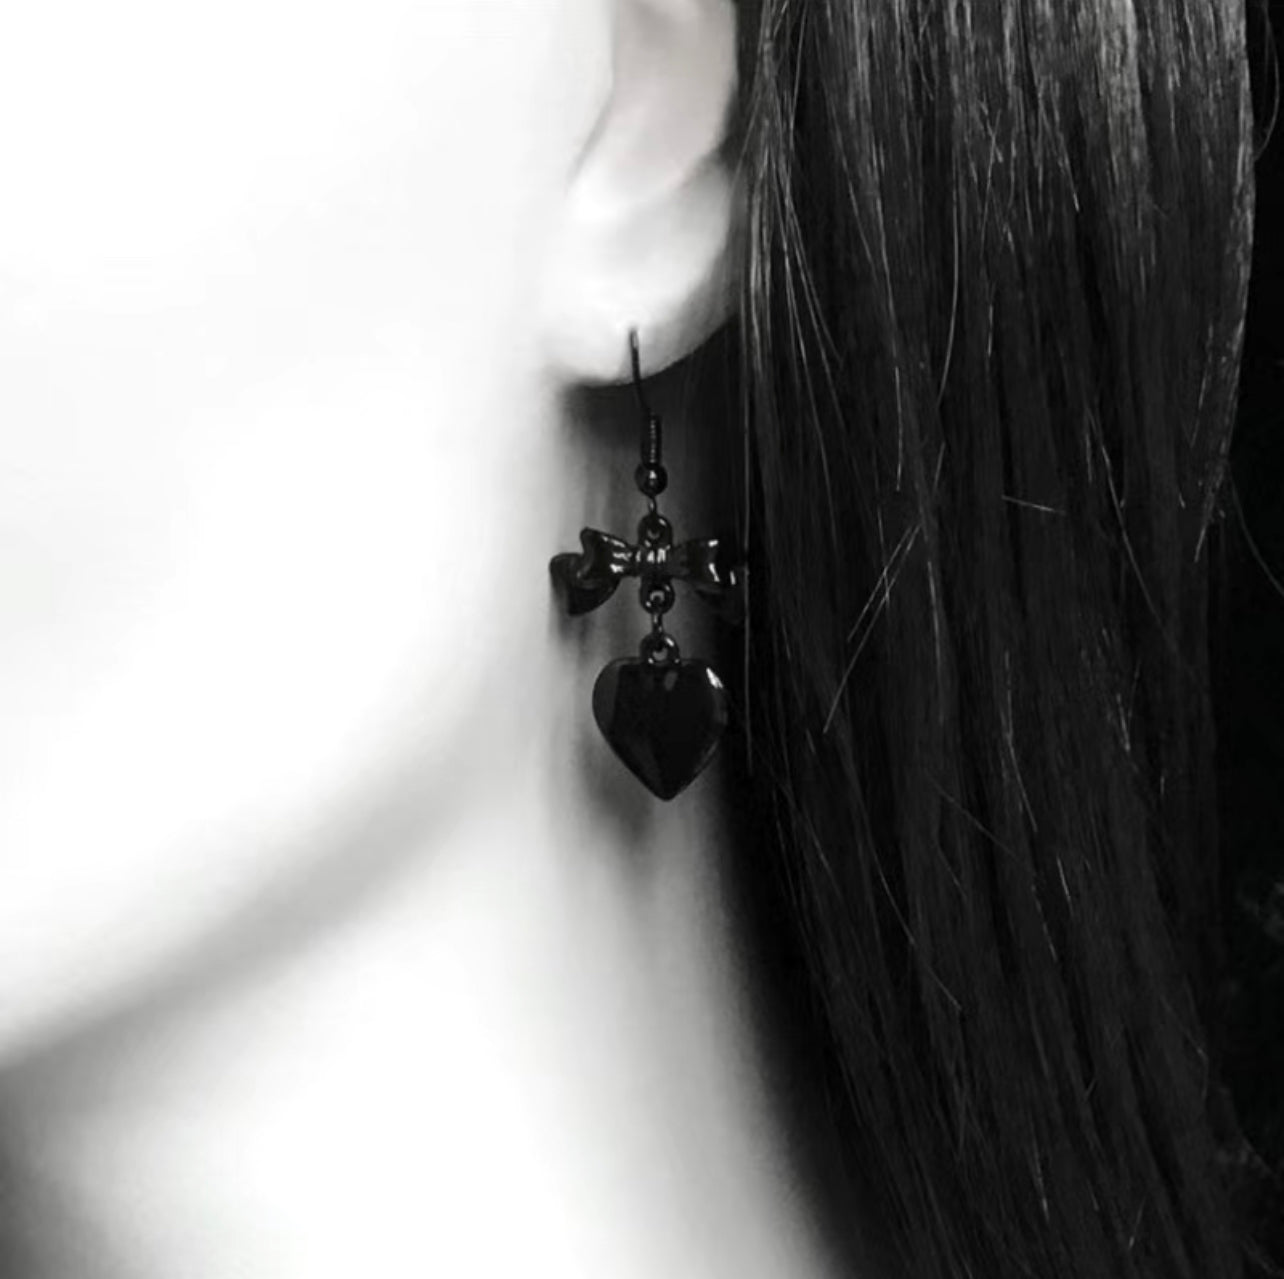 Black Gothic Bow Heart Dangle Earrings